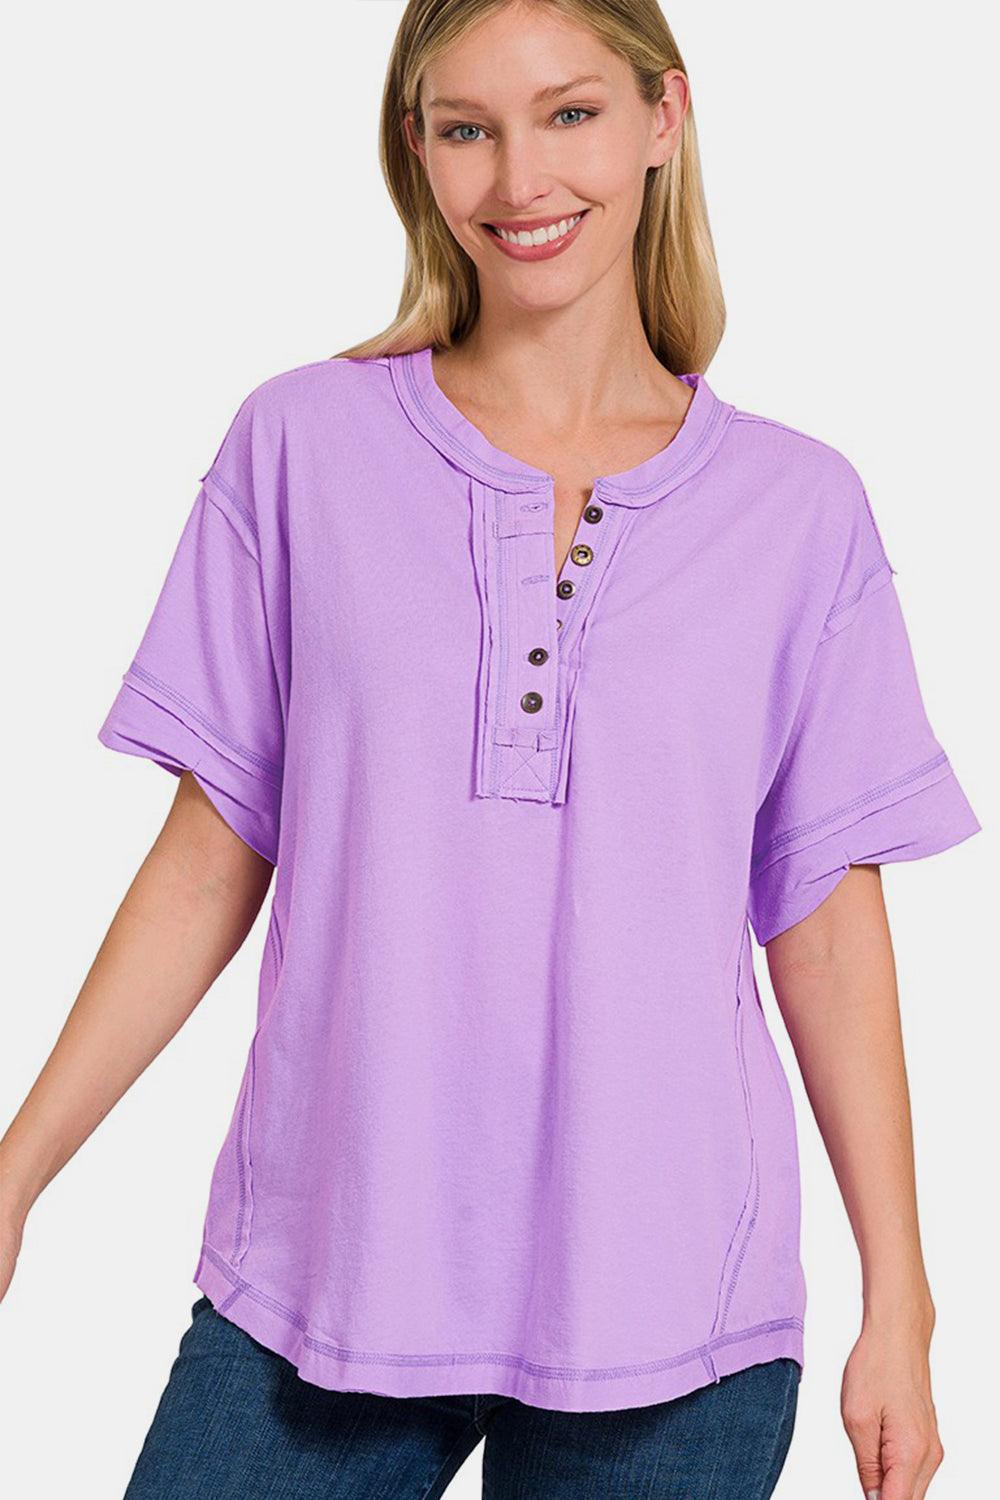 Zenana Exposed Seam Half Button Short Sleeve Top LAVENDER Shirts & Tops